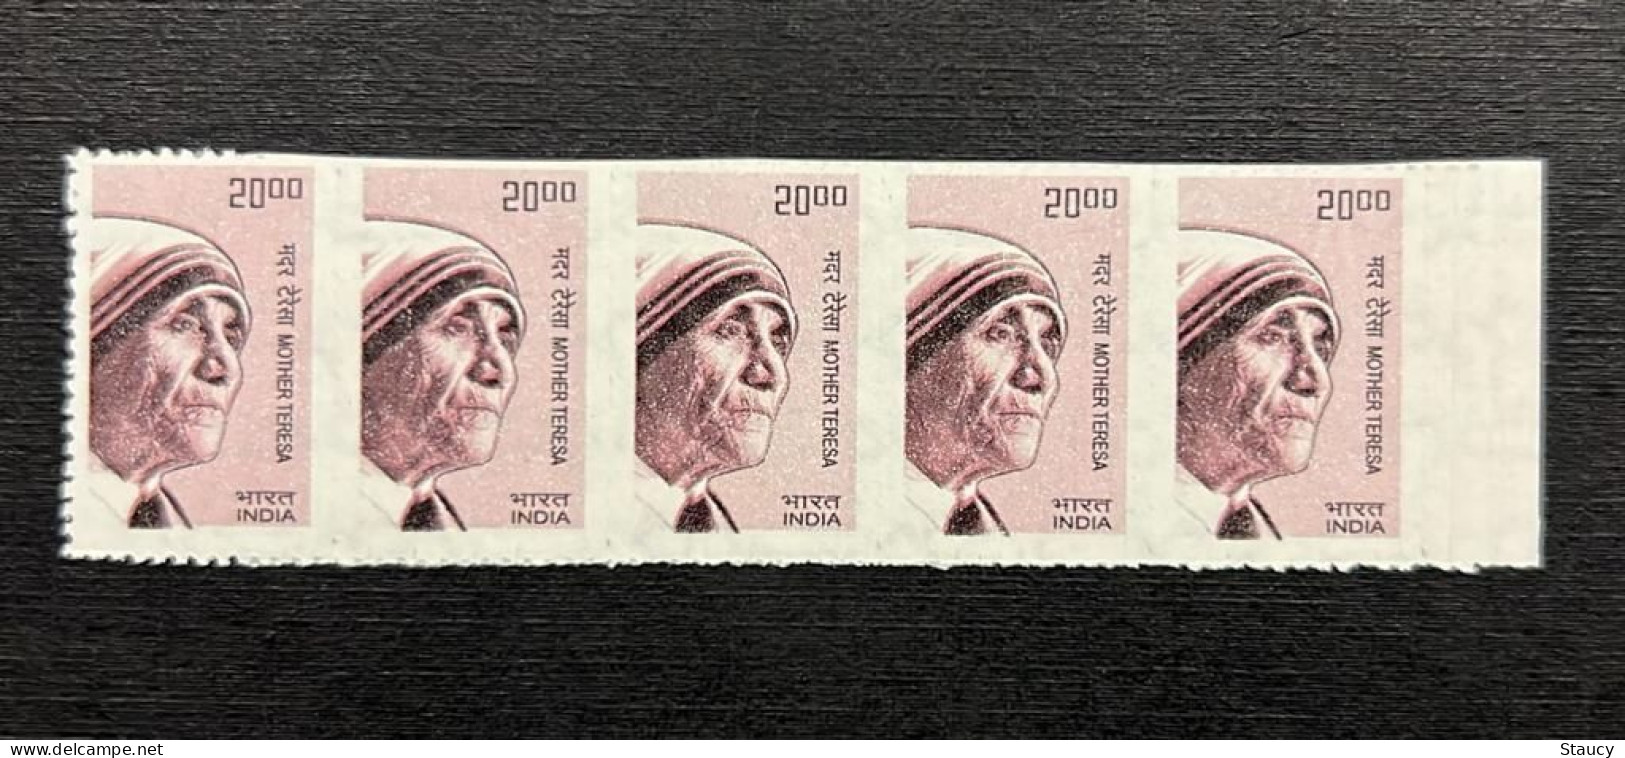 INDIA 2009 Error 10th. Definitive Series, Error "Imperf Strip Of 5 Stamps" Of "Mother Teresa" MNH As Per Scan - Variétés Et Curiosités